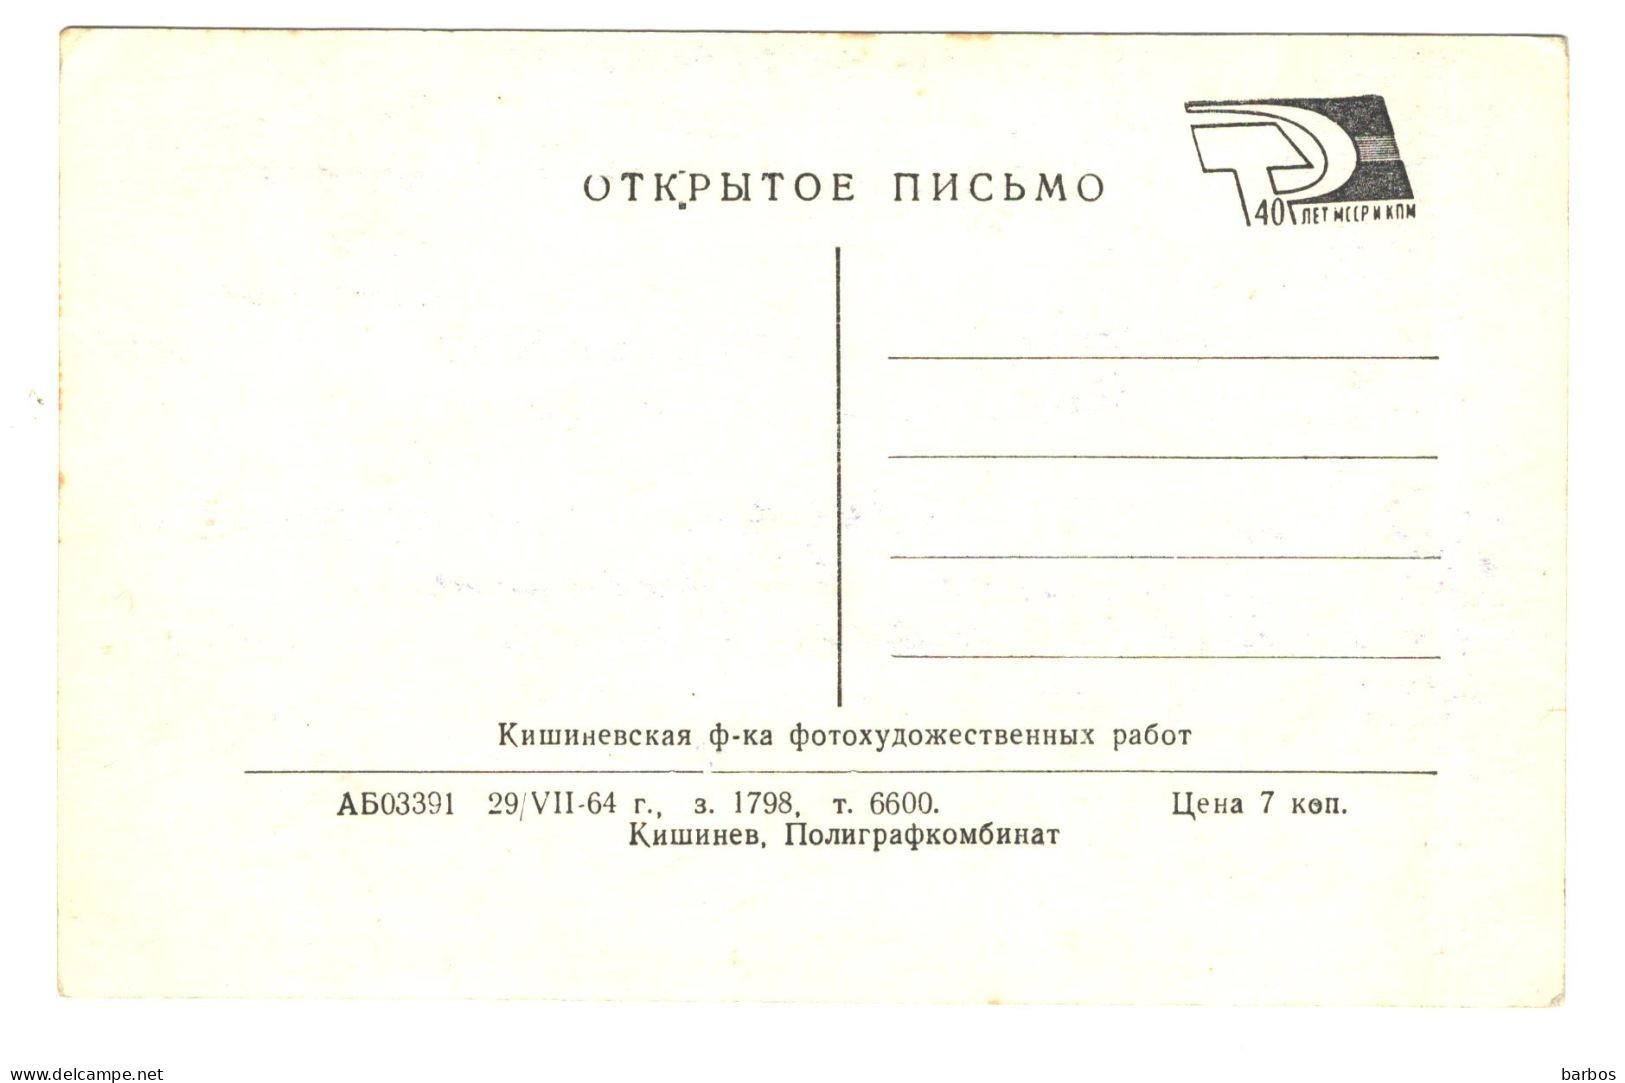 Moldova , Moldavie , Chisinau , 1964 , Basarabia , Bessarabia , Bessarabie , URSS , Academy Of Sciences, Postcard - Moldavie